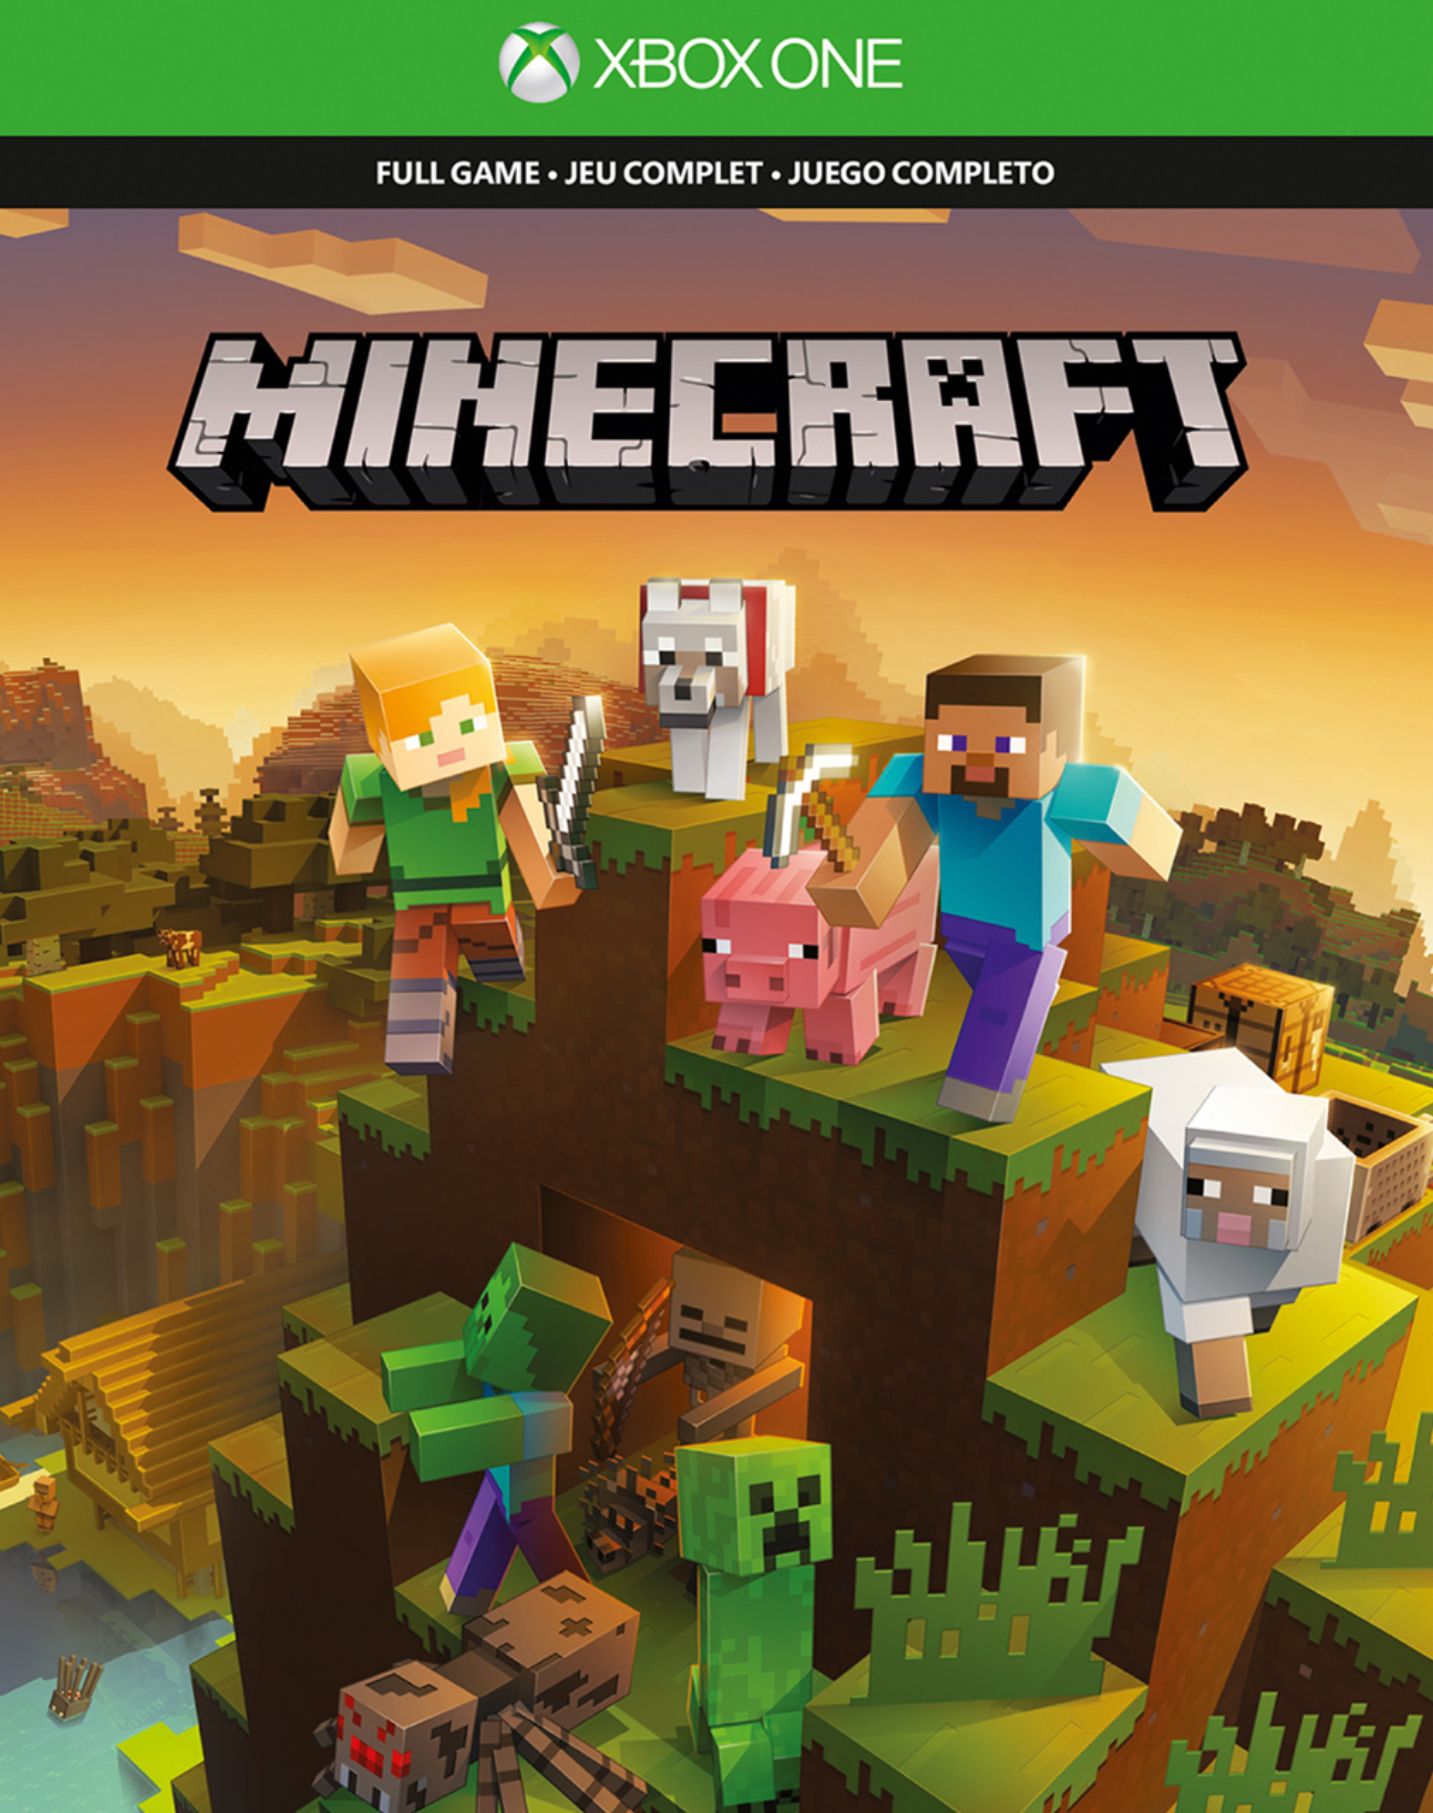 Best Buy: Microsoft Xbox One S 1TB Minecraft Creators Bundle with